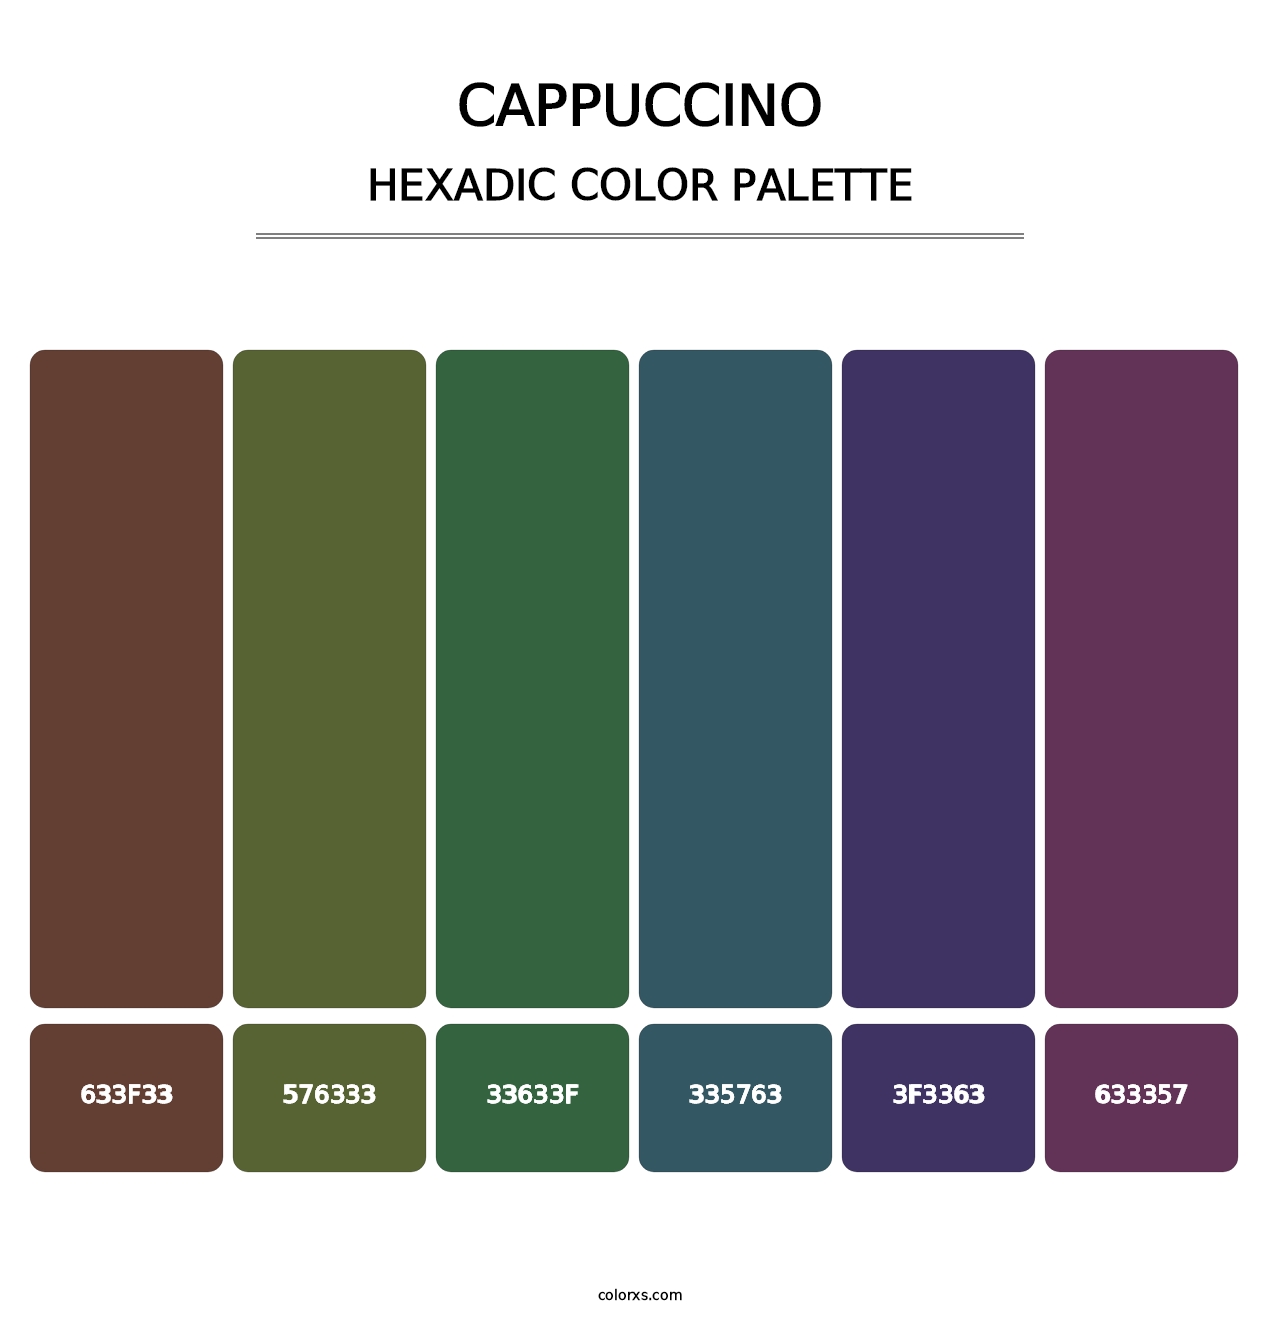 Cappuccino - Hexadic Color Palette